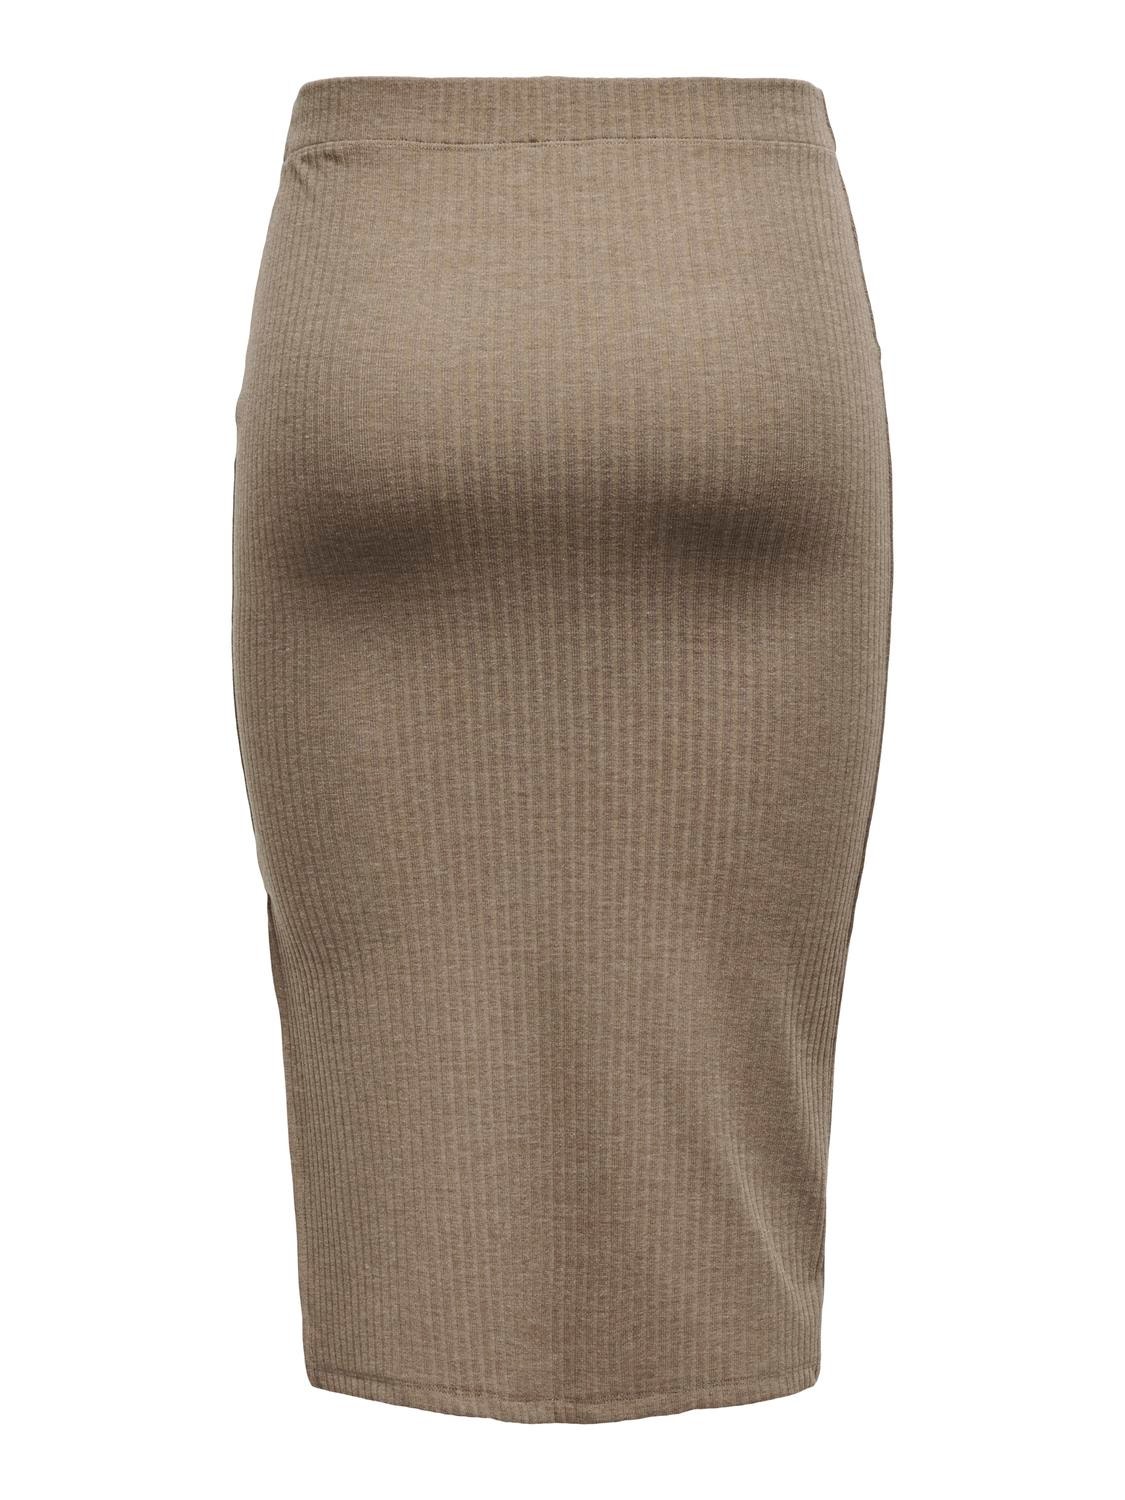 ONLY Short skirt -Caribou - 15233600